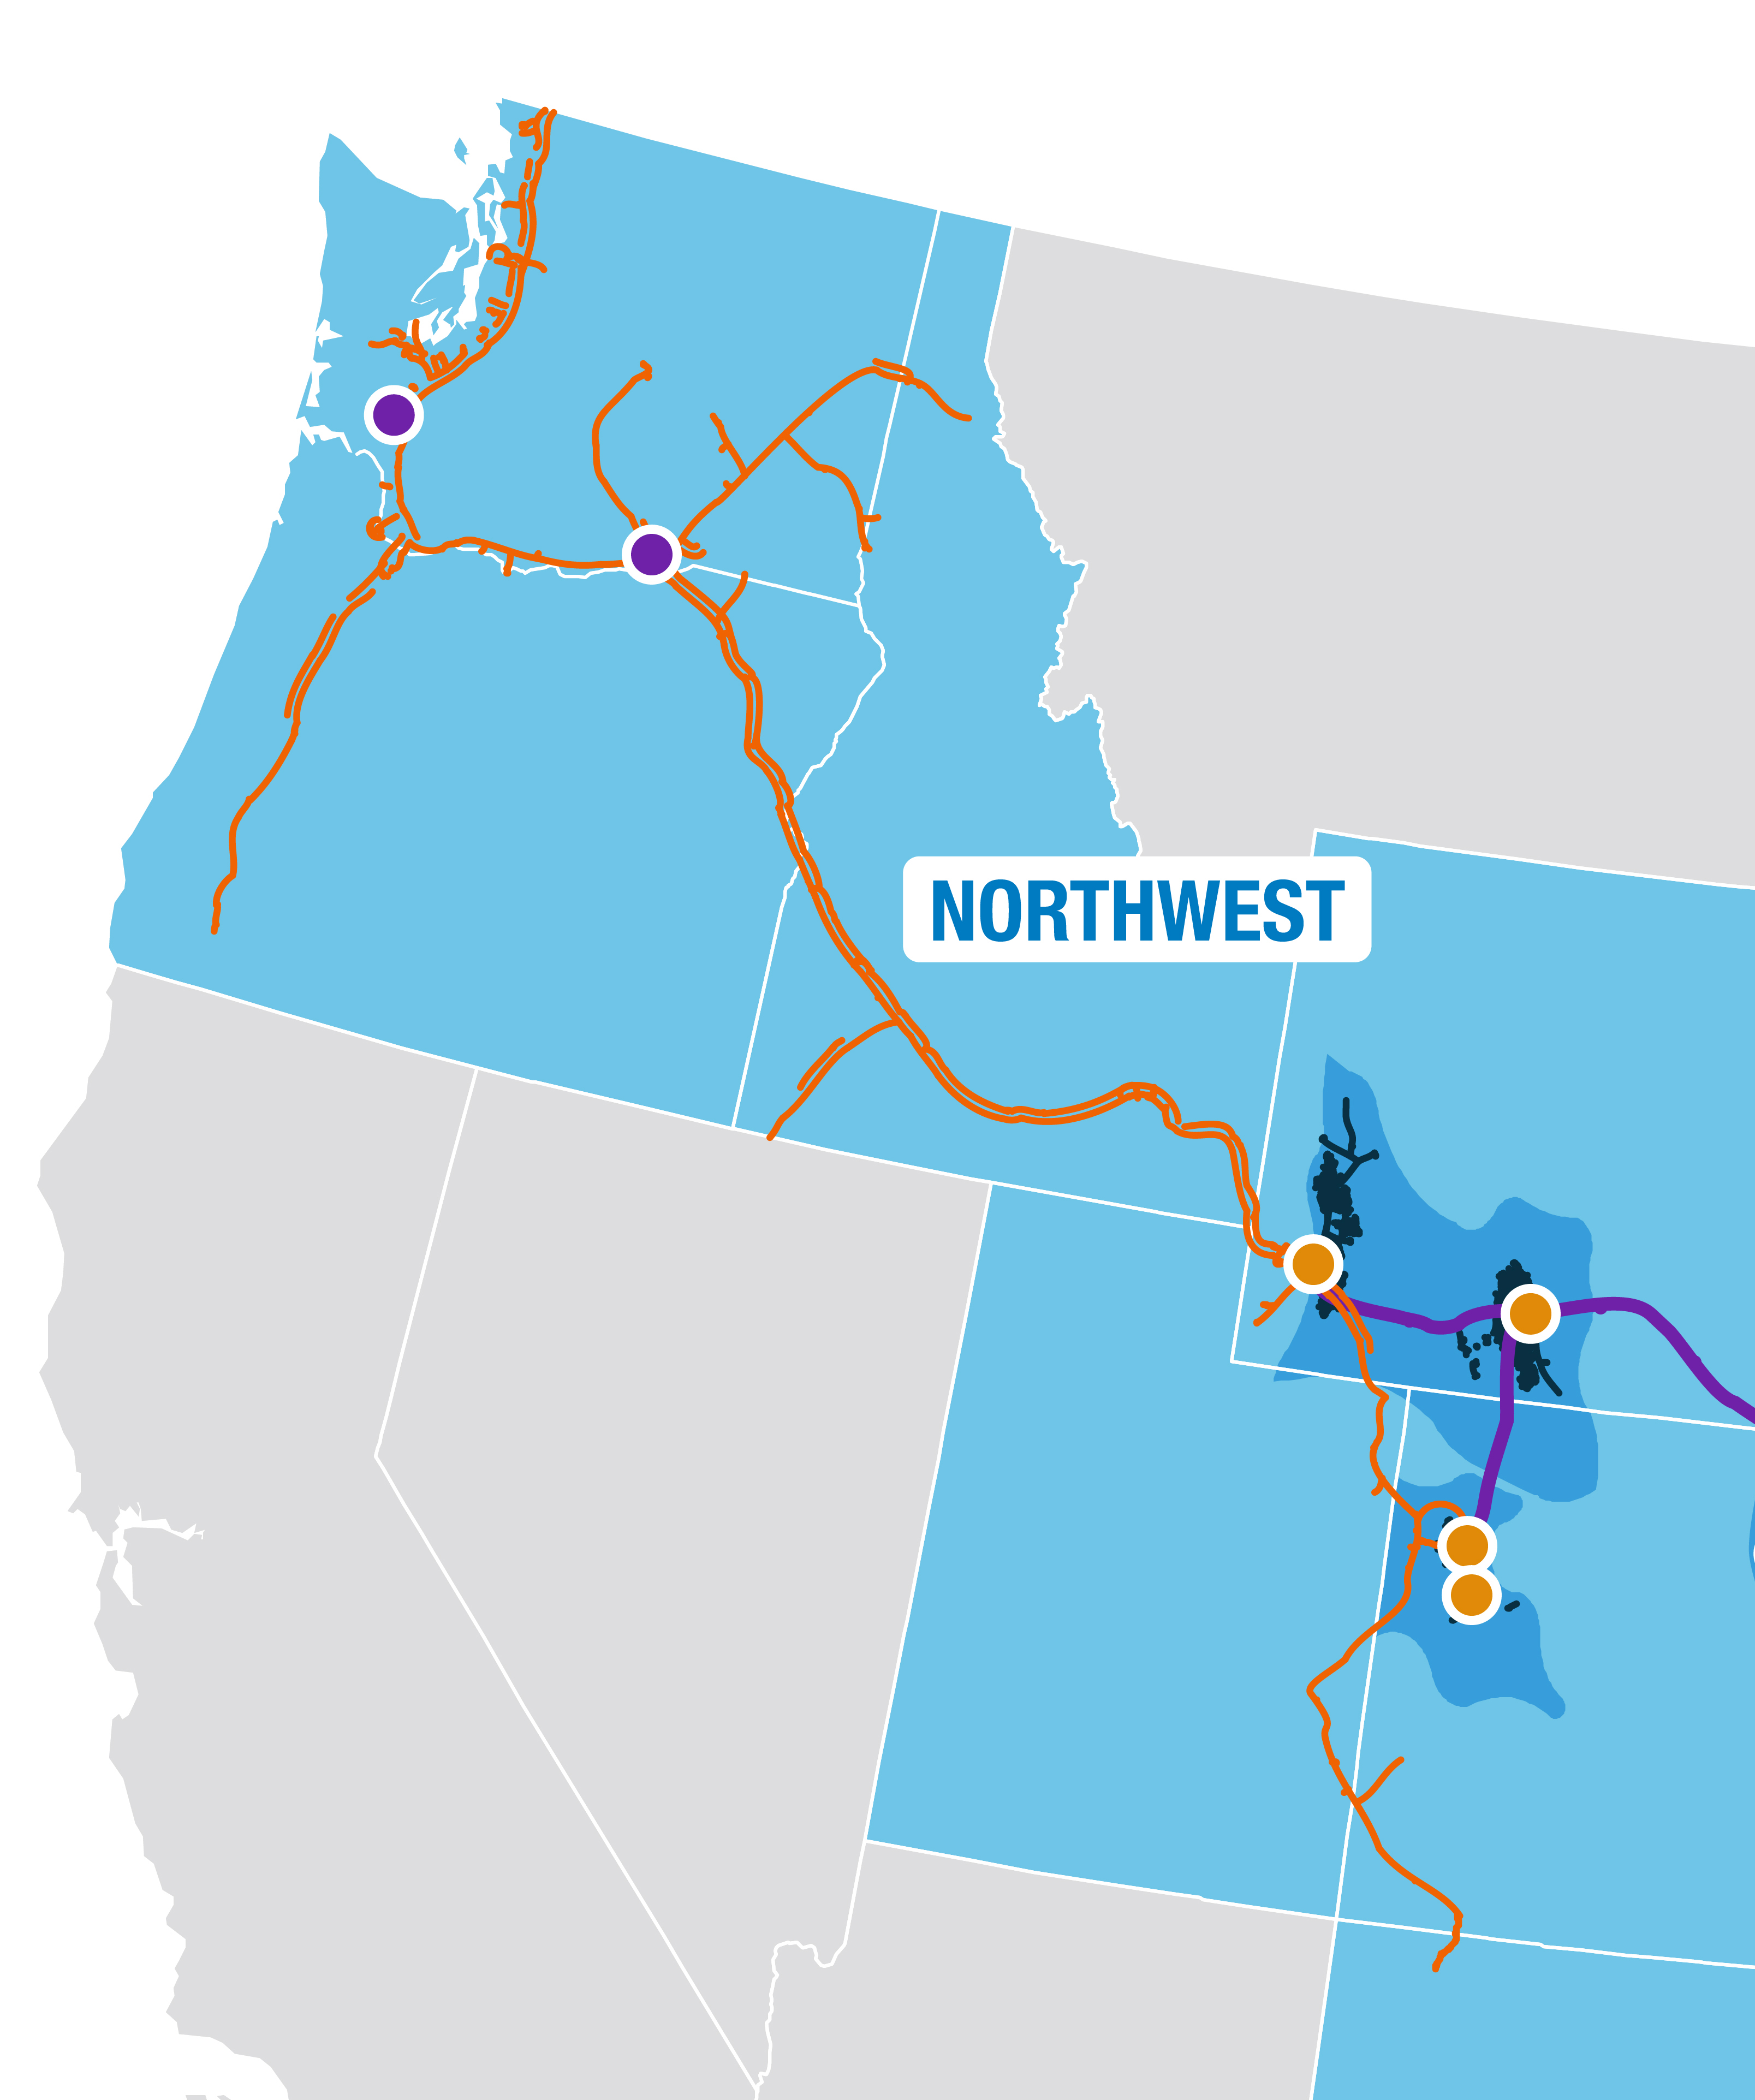 Northwest Pipelines Flexibility Helped Meet Demand During Winter